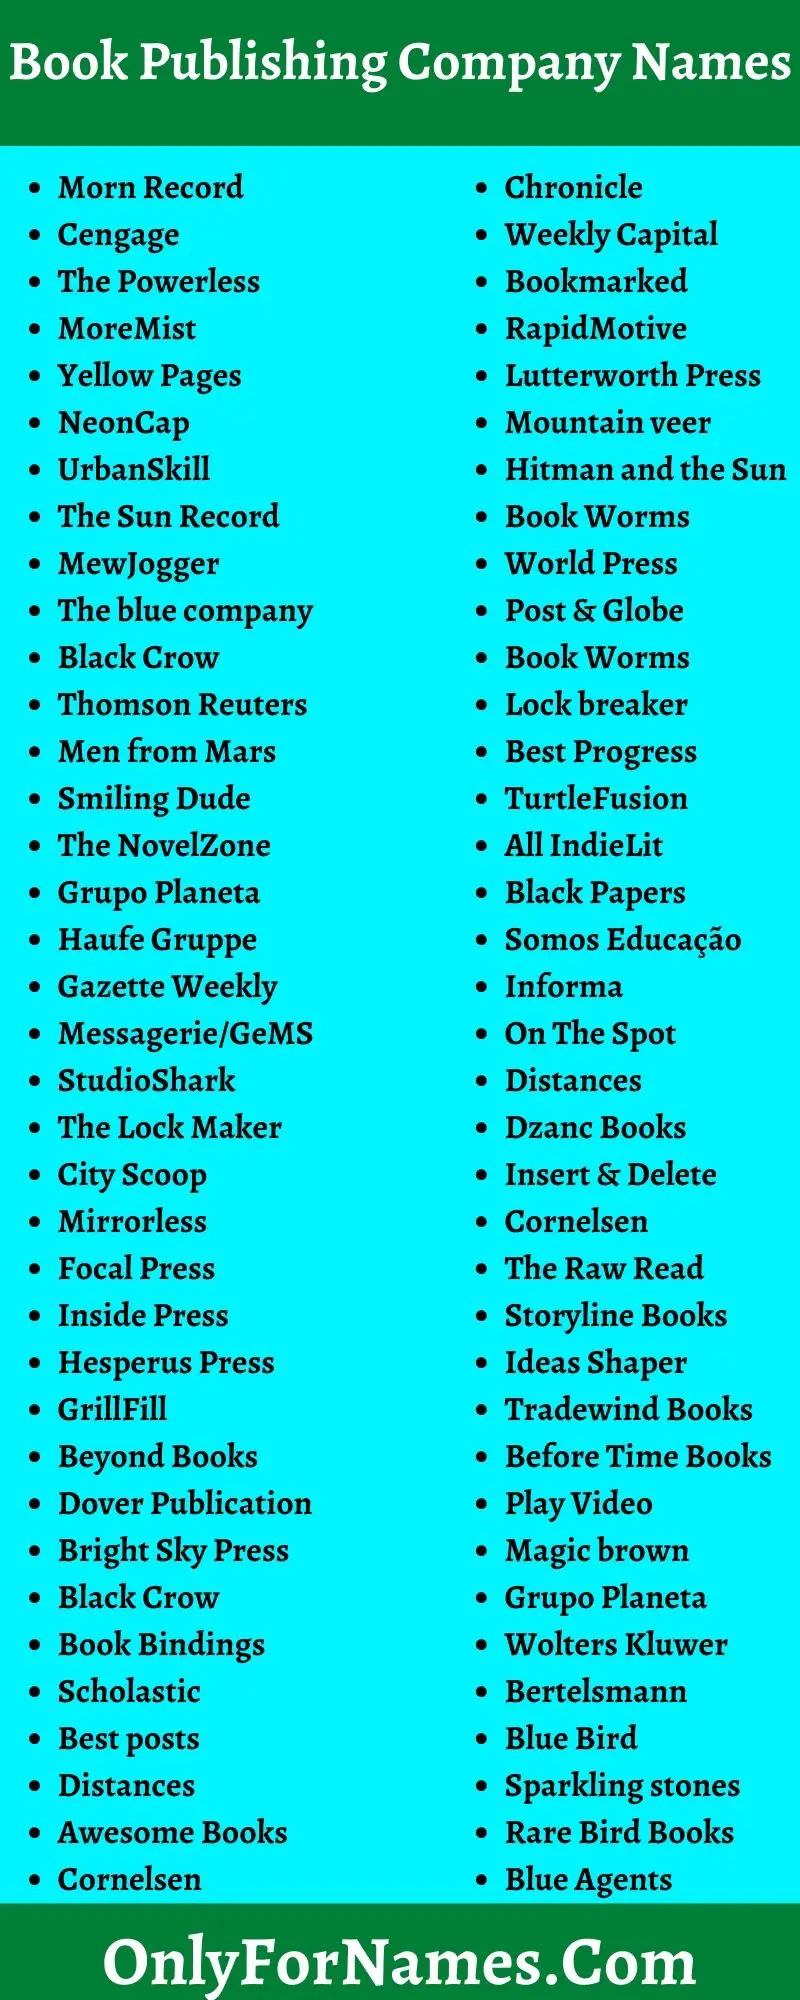 Book Publishing Company Names